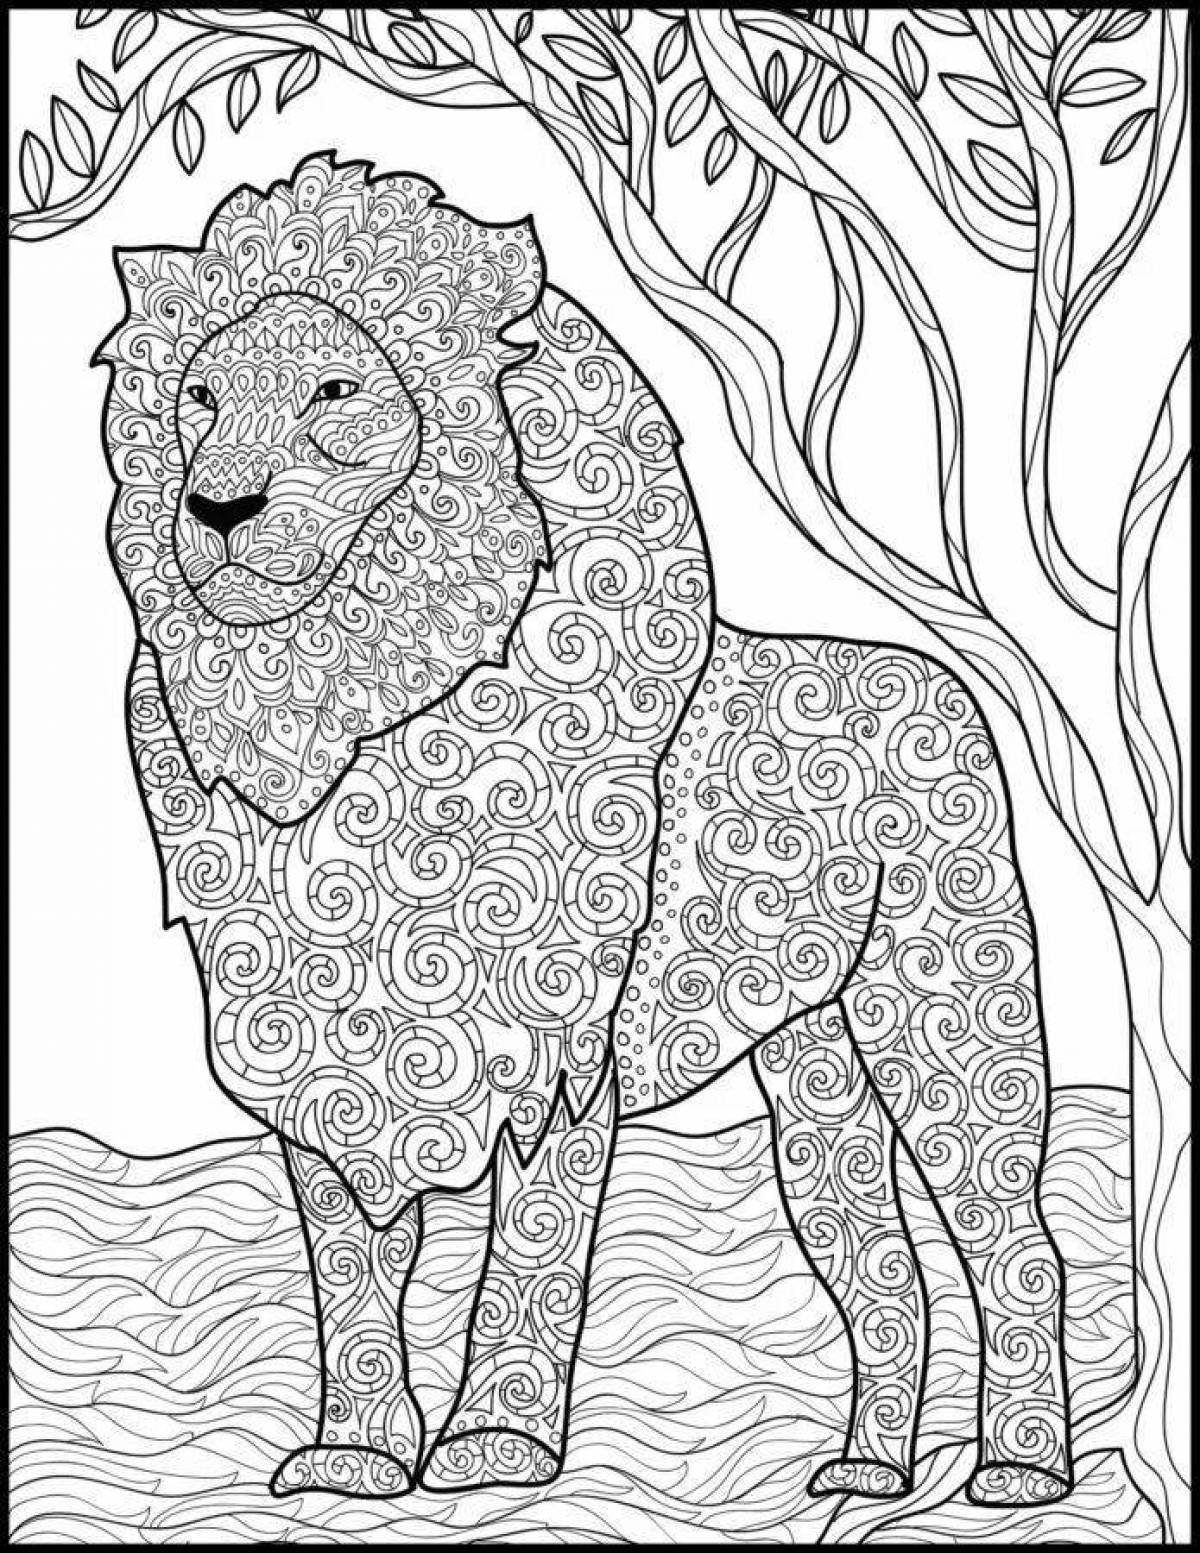 Mysterious lion coloring complex